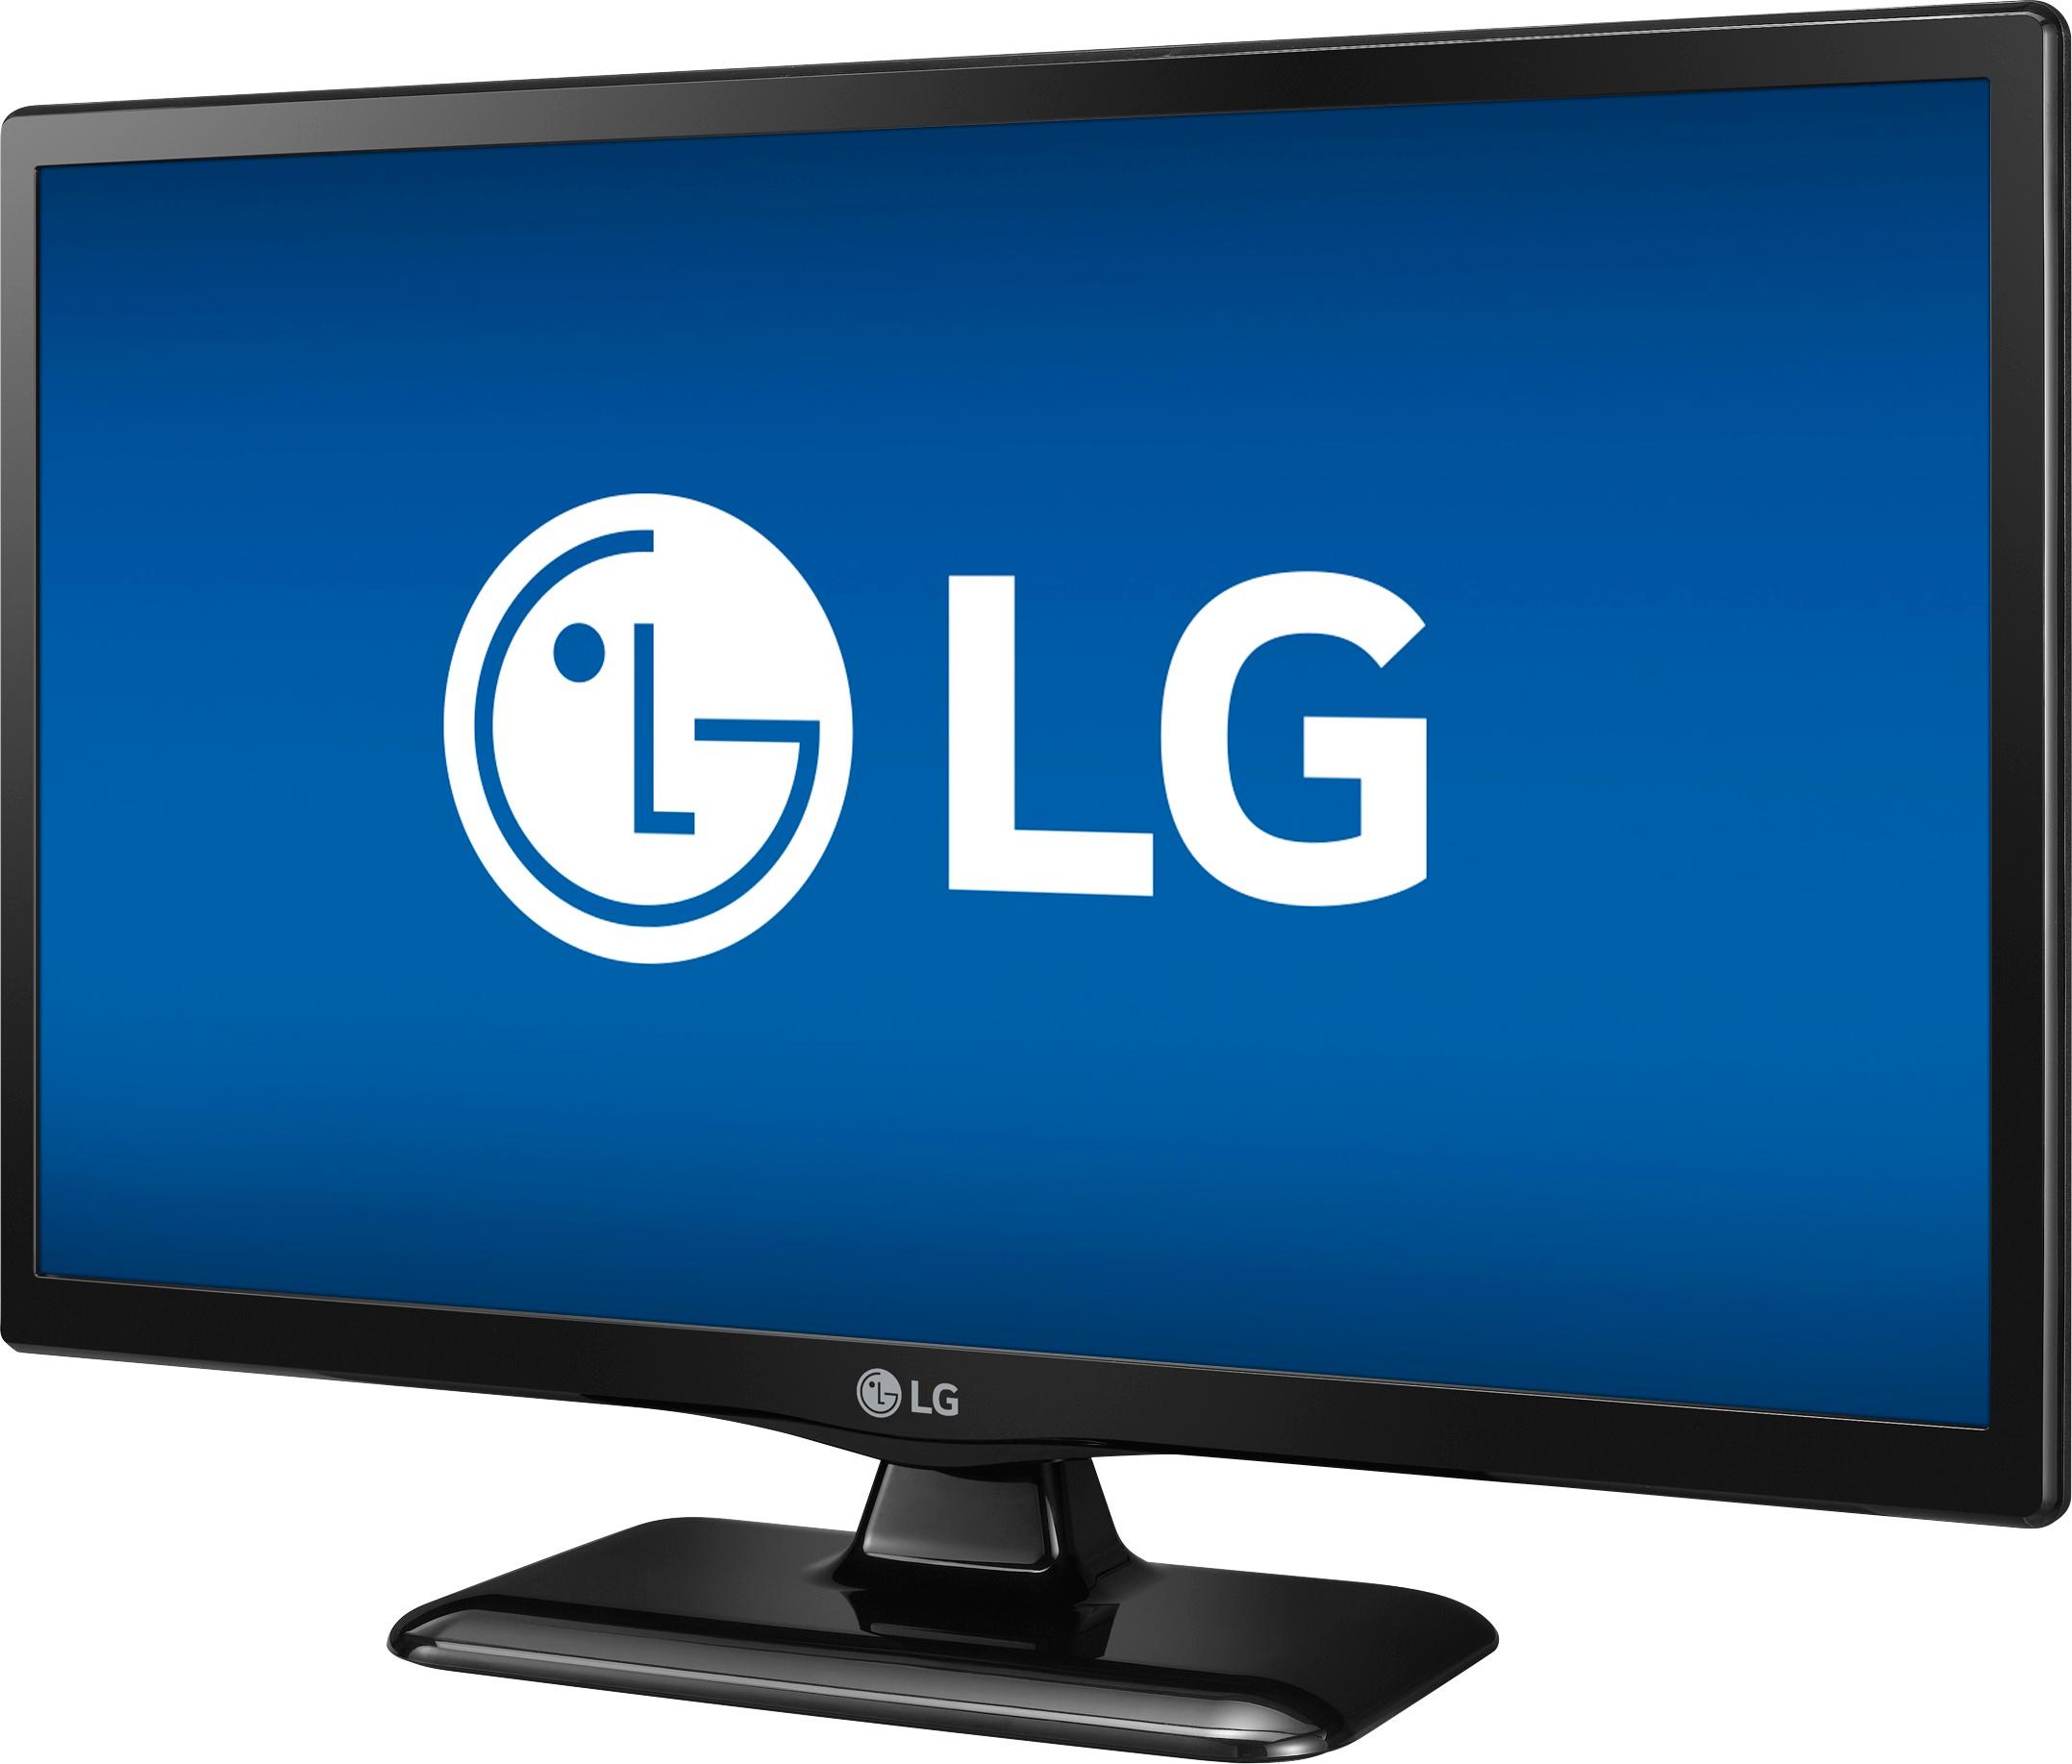 LG 42 inch LED TV LN549E  LG Centroamérica y el Caribe